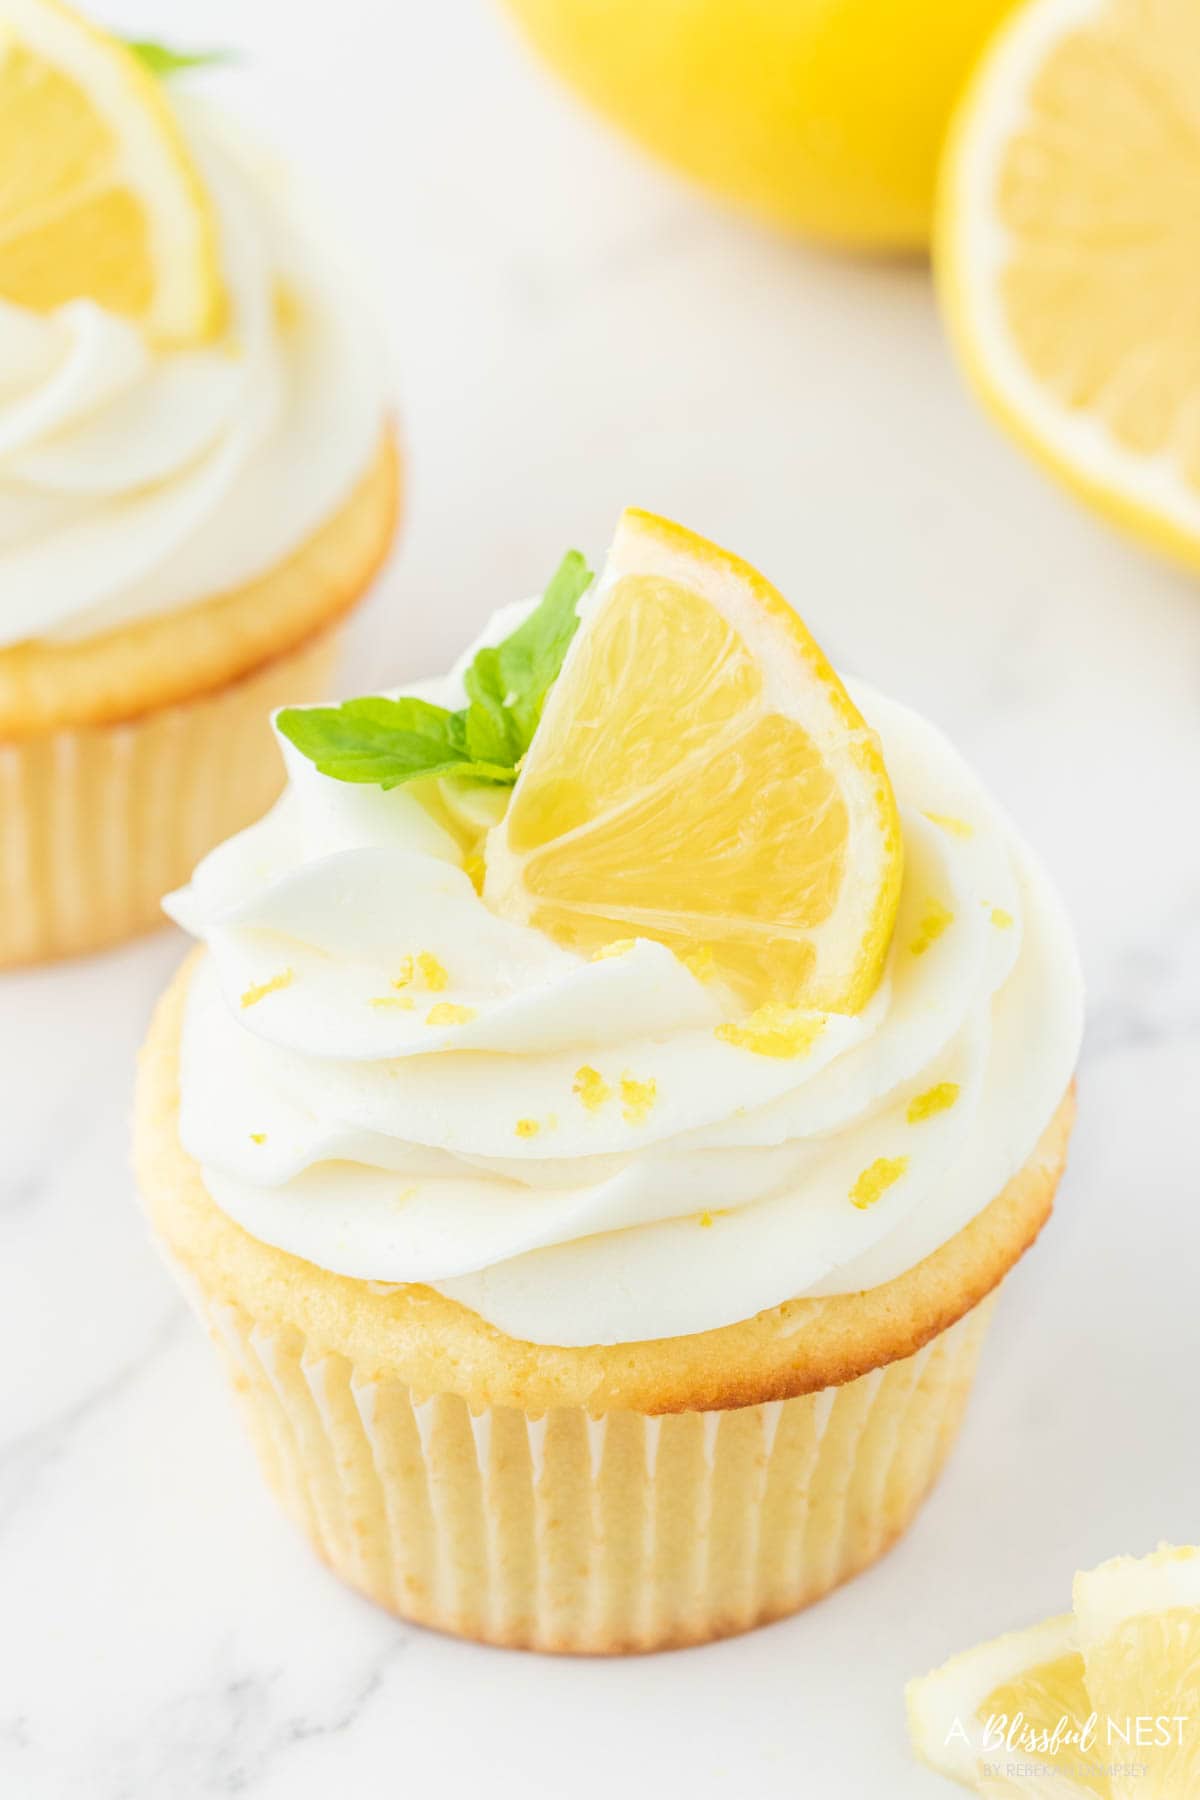 Lemon cupcake with lemon slice and mint ontop.